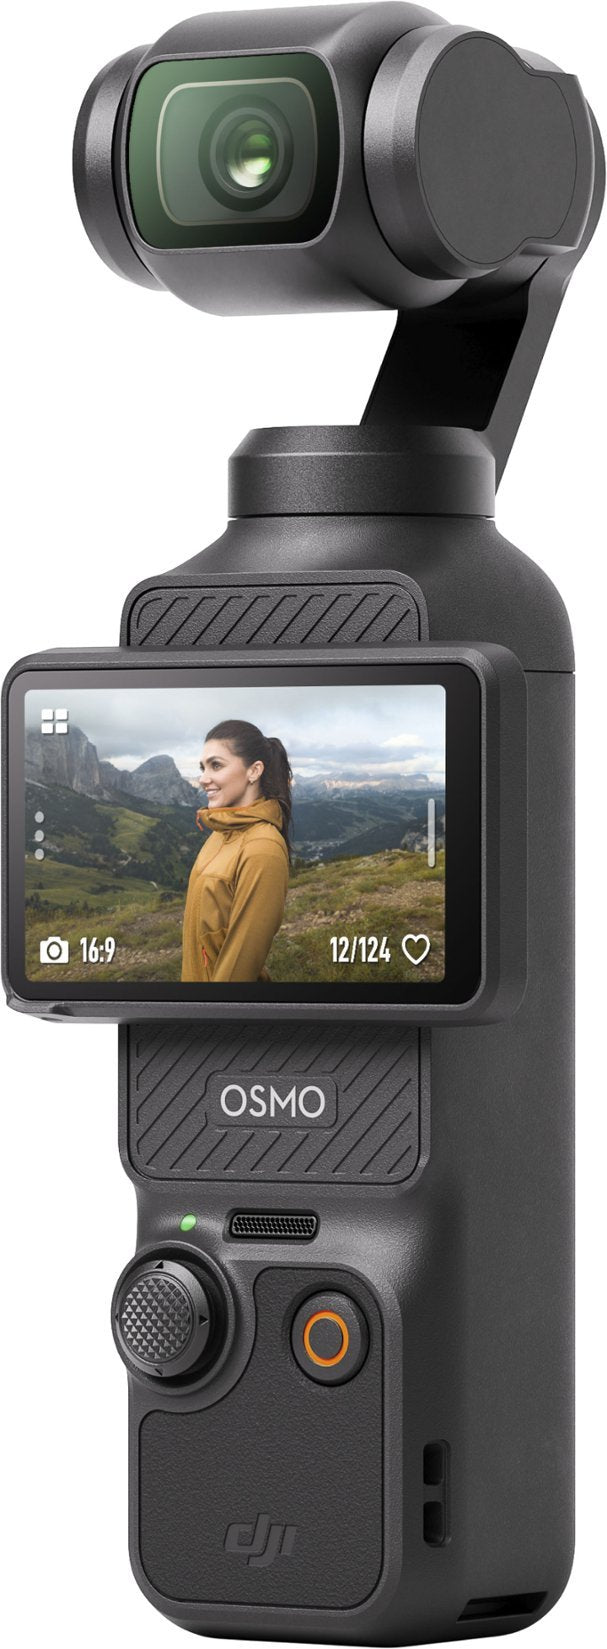 DJI | Camera Osmo Pocket 3 Creator Combo Retail  - Black | CP.OS.00000302.01